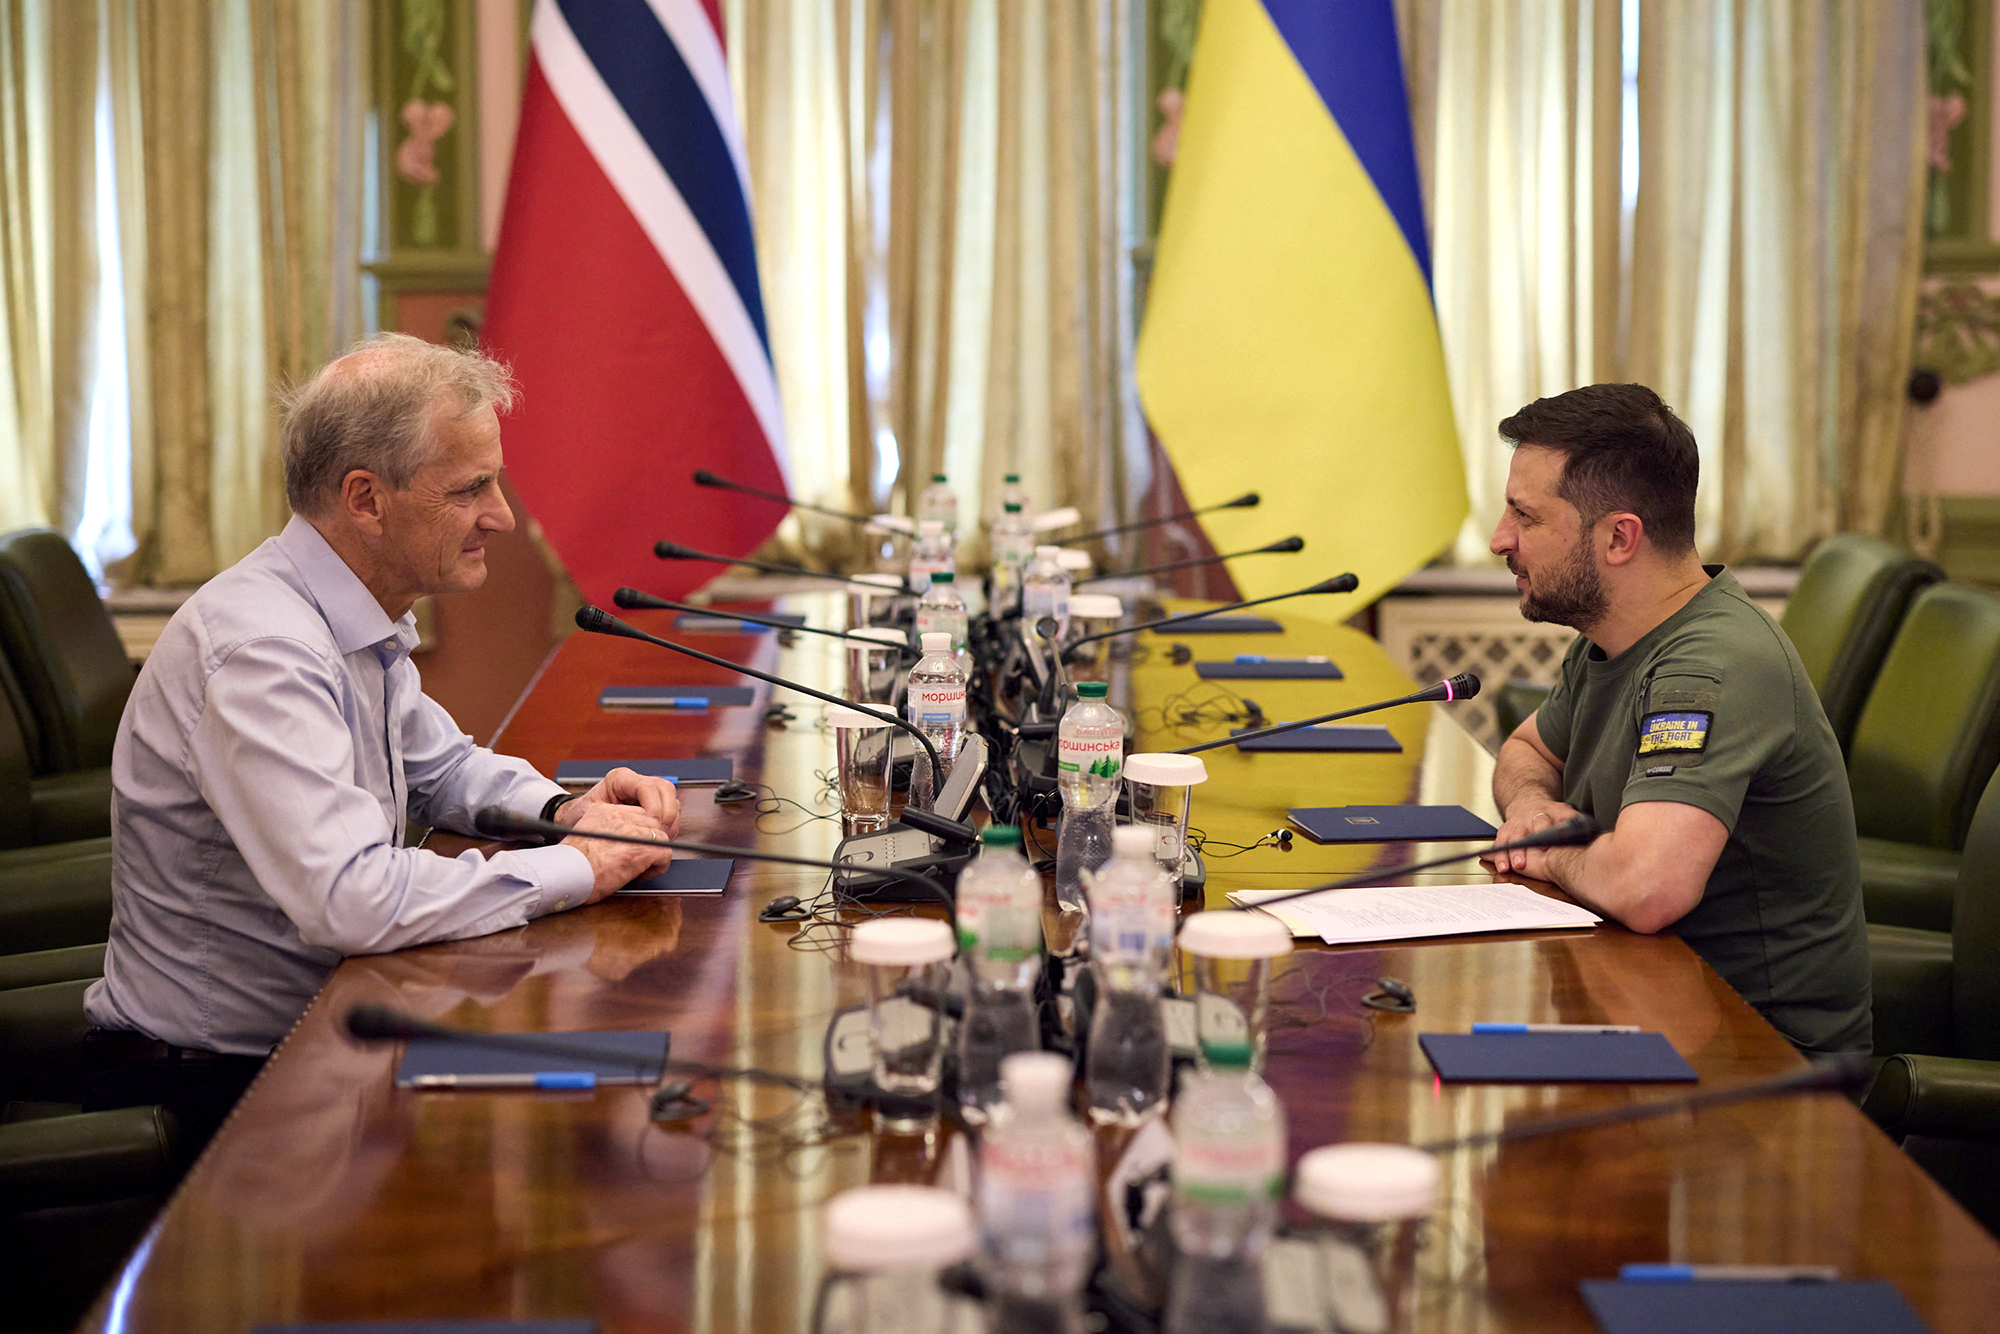 Norway's Prime Minister Jonas Gahr Støre attends a meeting with Ukraine's President Volodymyr Zelensky in Kyiv, Ukraine on July 1. (Ukrainian Presidential Press Service/Handout/Reuters)